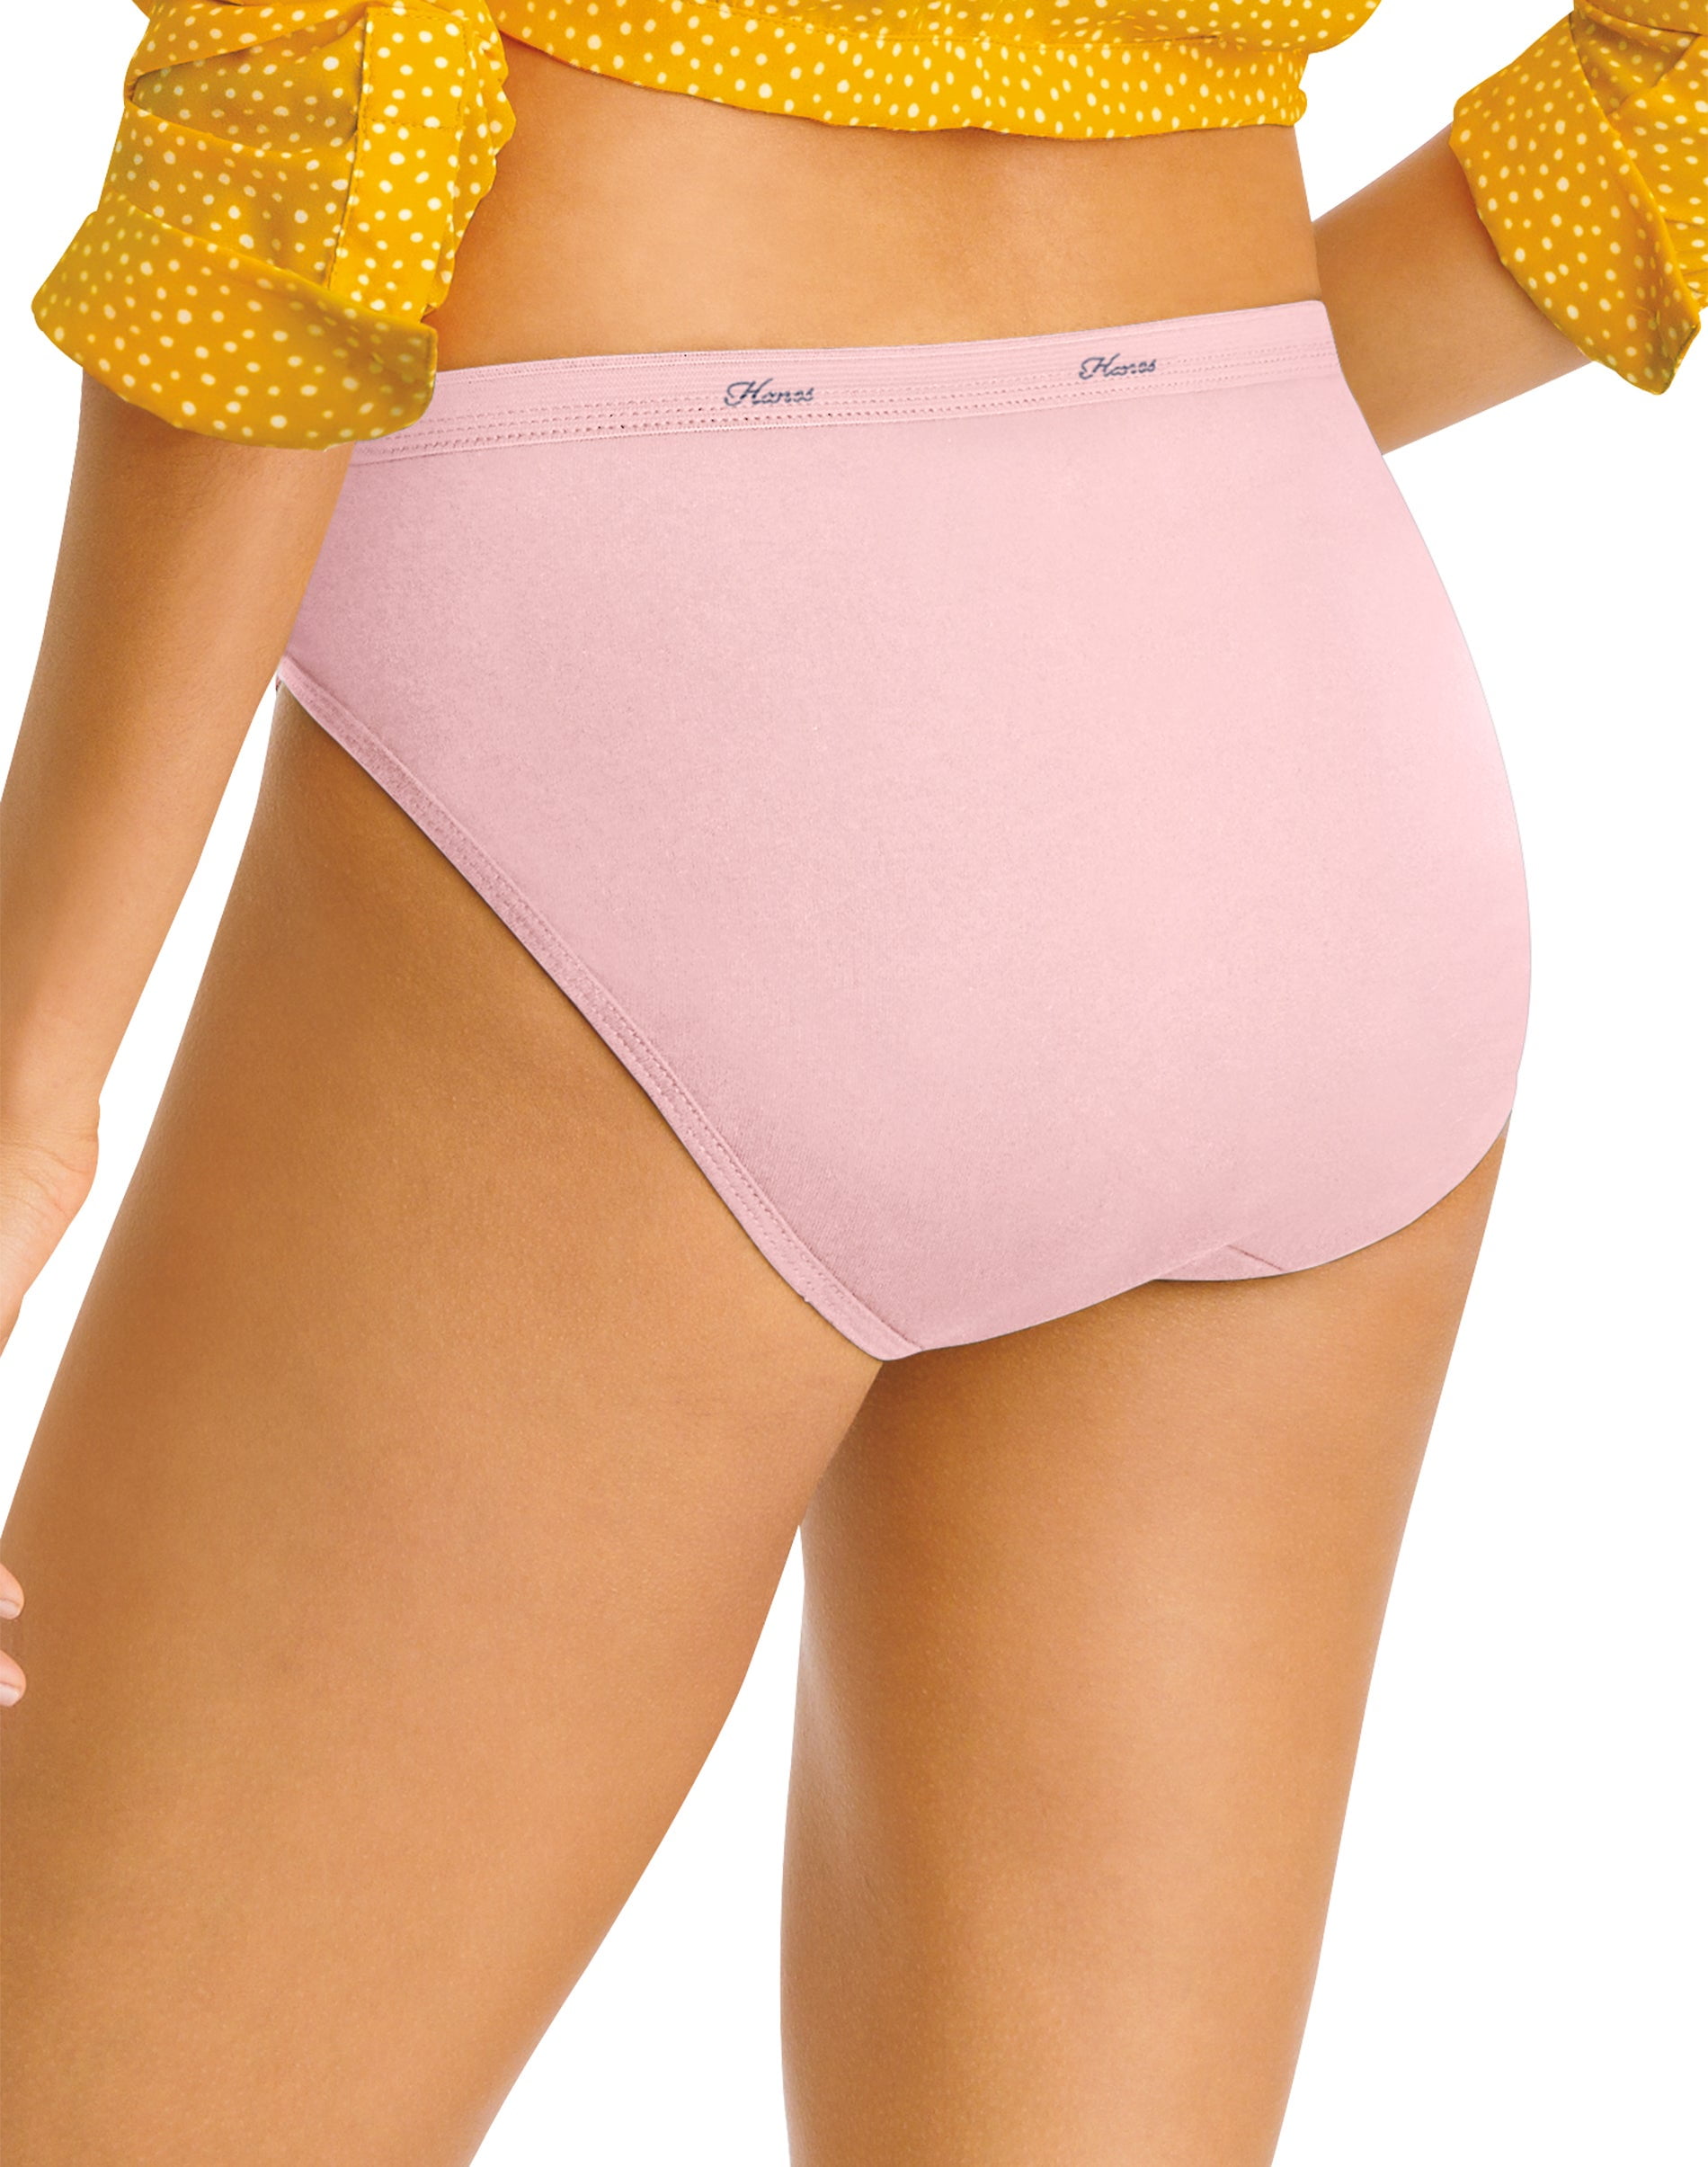 Hanes, Intimates & Sleepwear, Hanes Women Panties 9 Pairs High Cut Low  Waist Various Colors Cotton Nwot